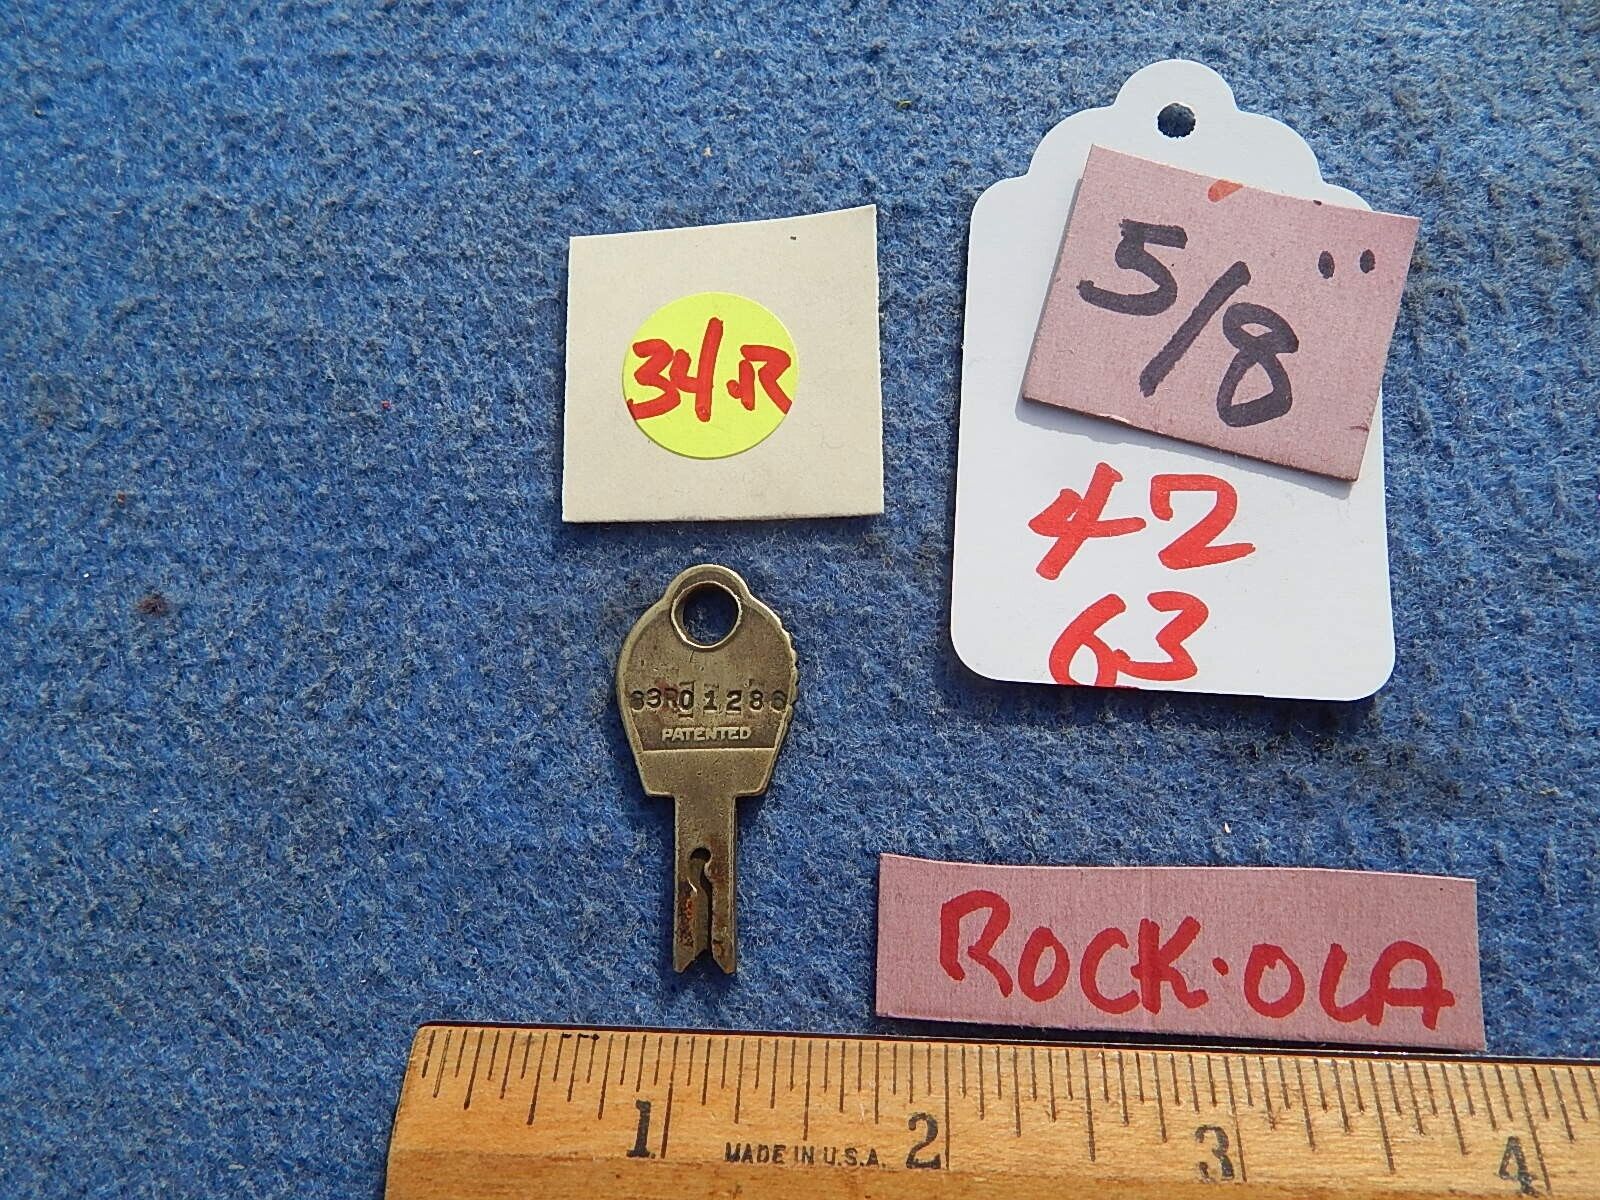 1946-1948 Rock-ola Key for 5/8 inch lock - Bell Lock 63 RO 1286